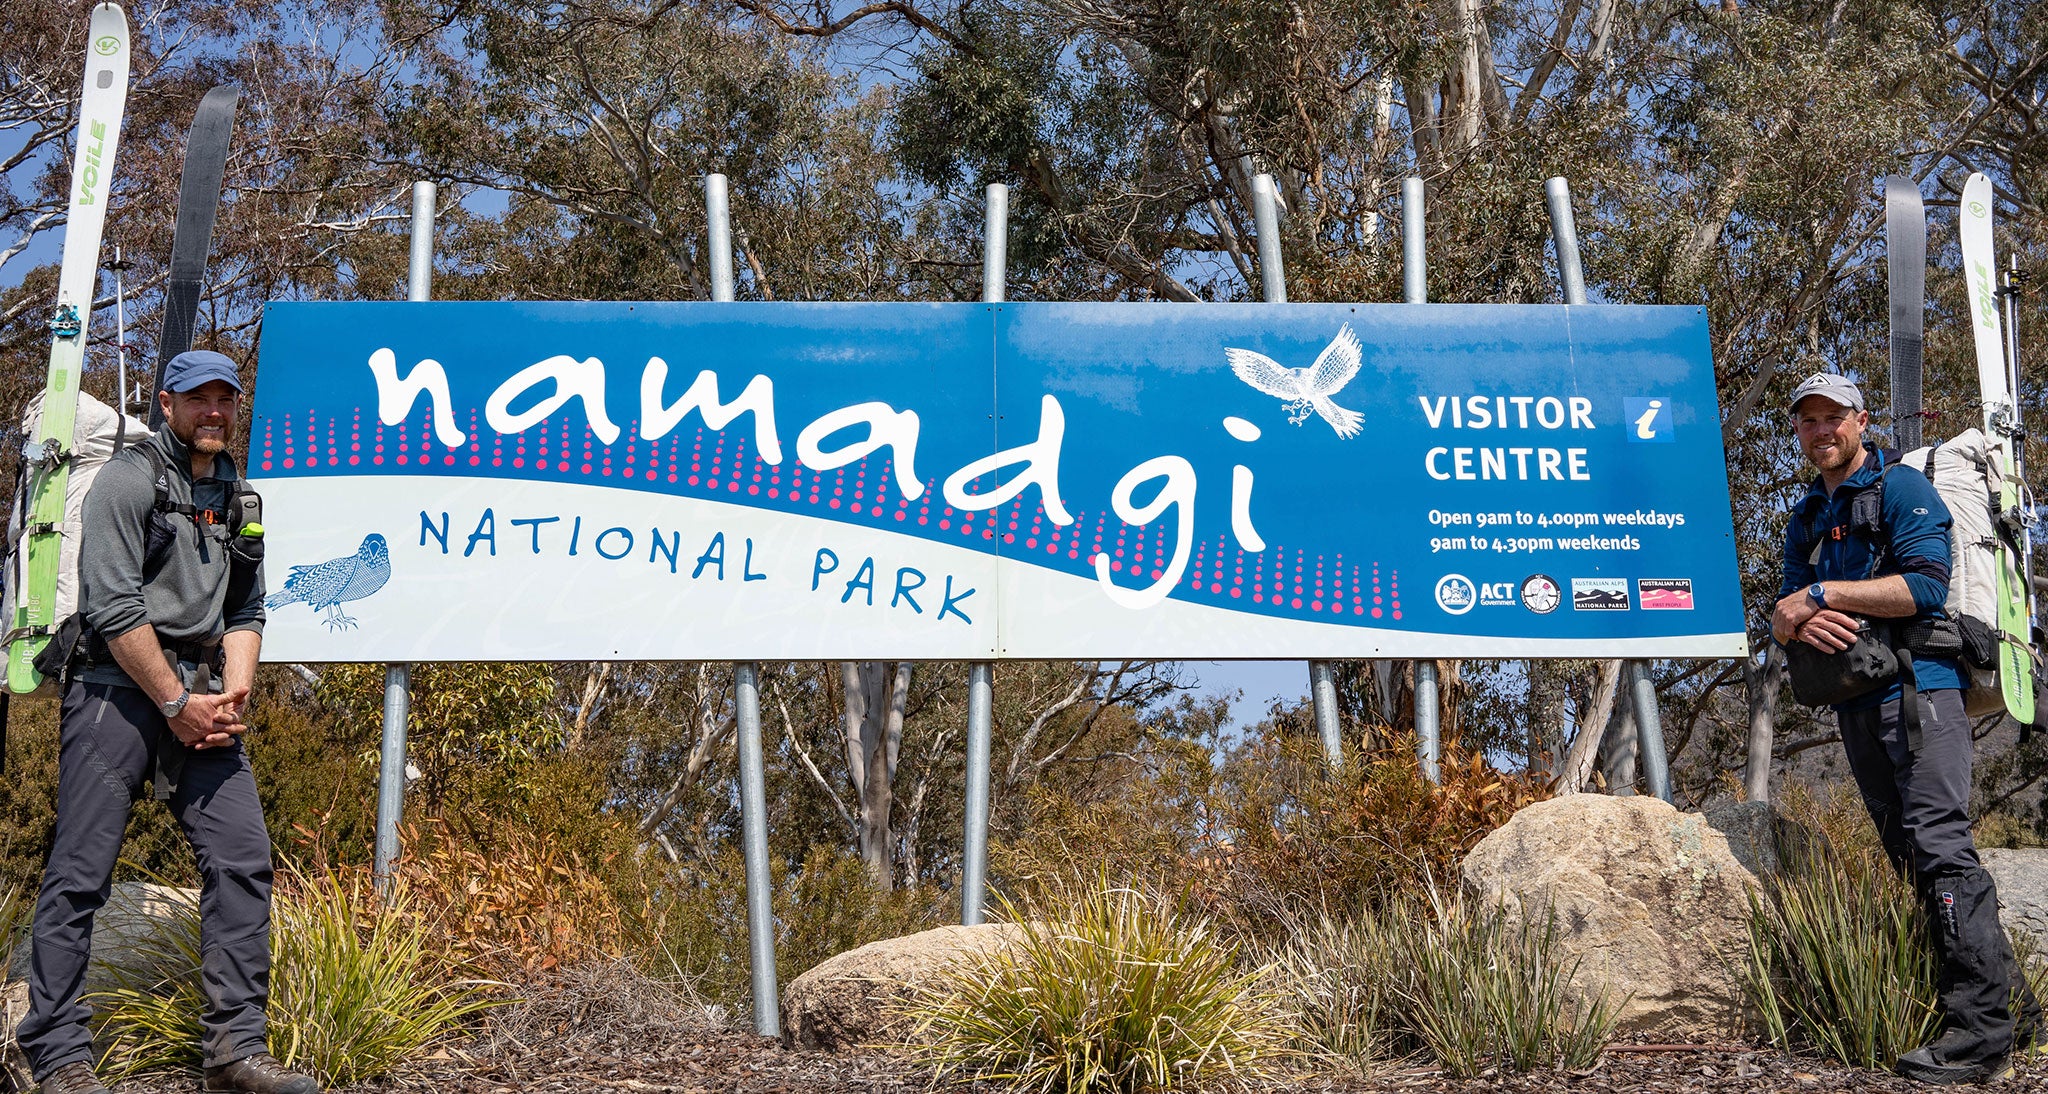 Namadgi National Park Visitor Centre sign post